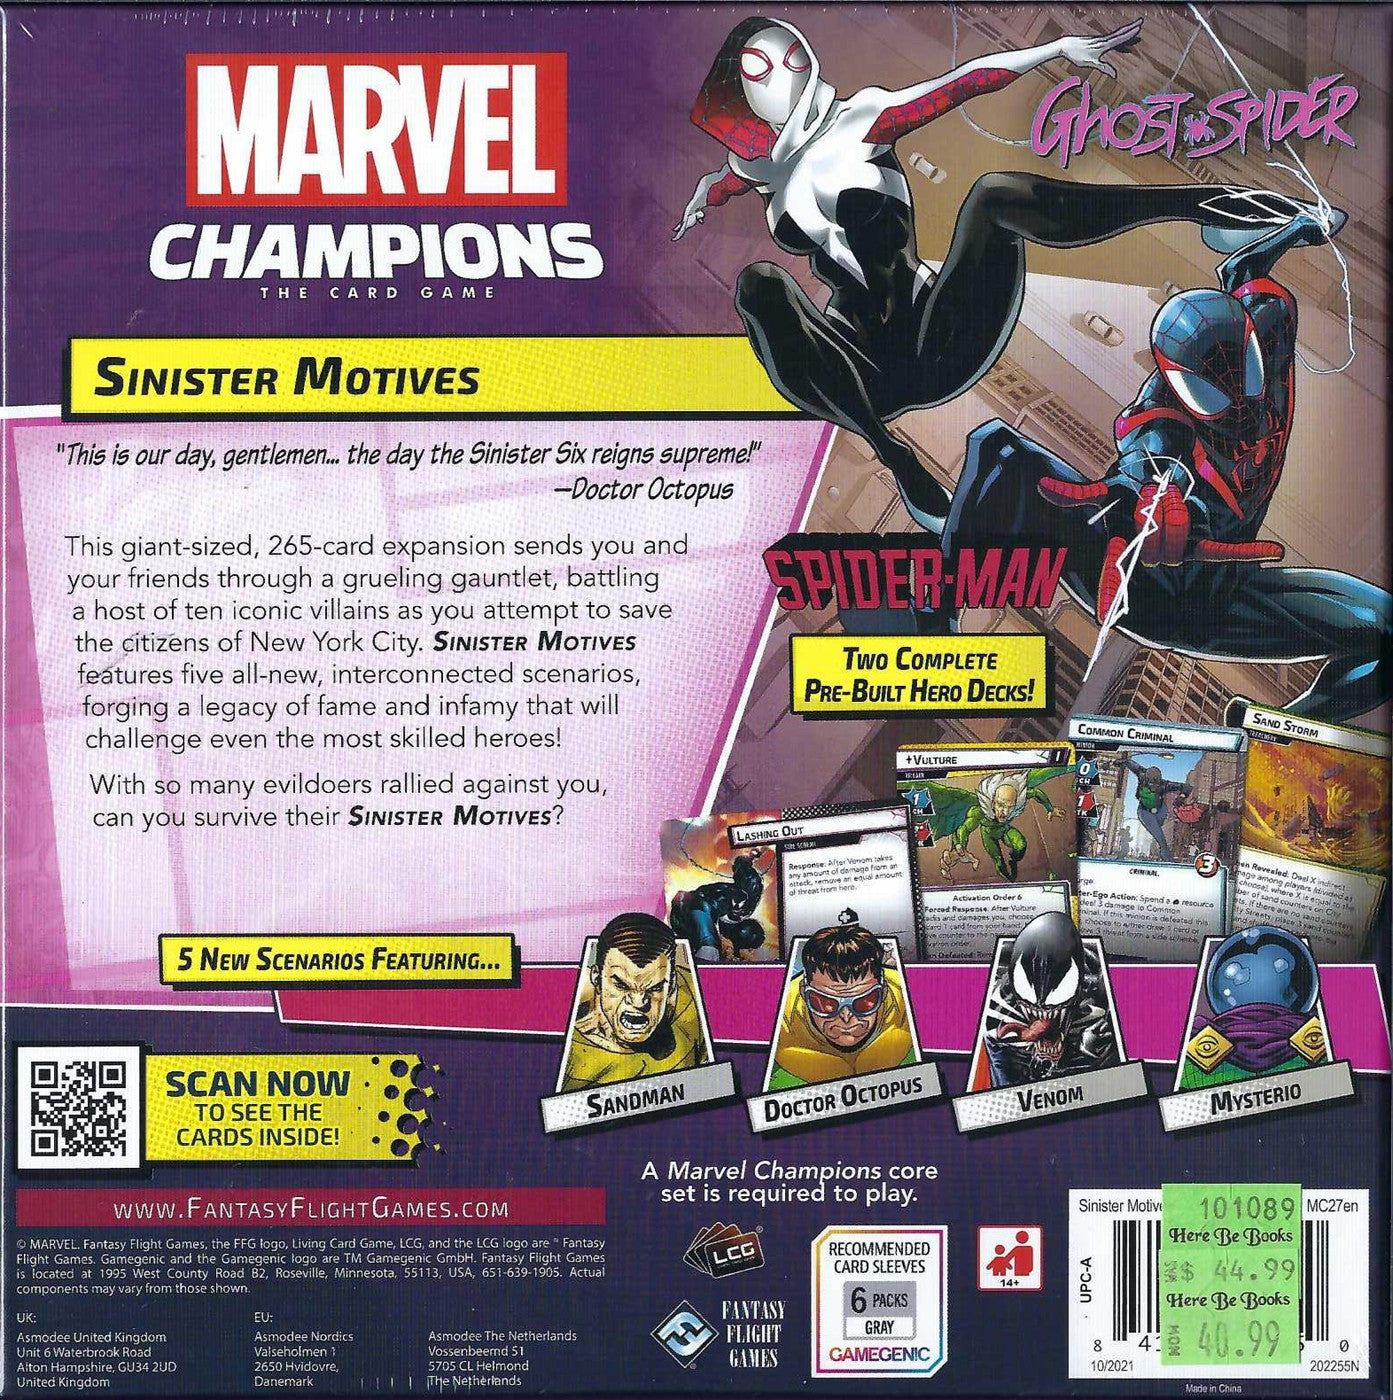 Marvel Champions: Sinister Motives expansion